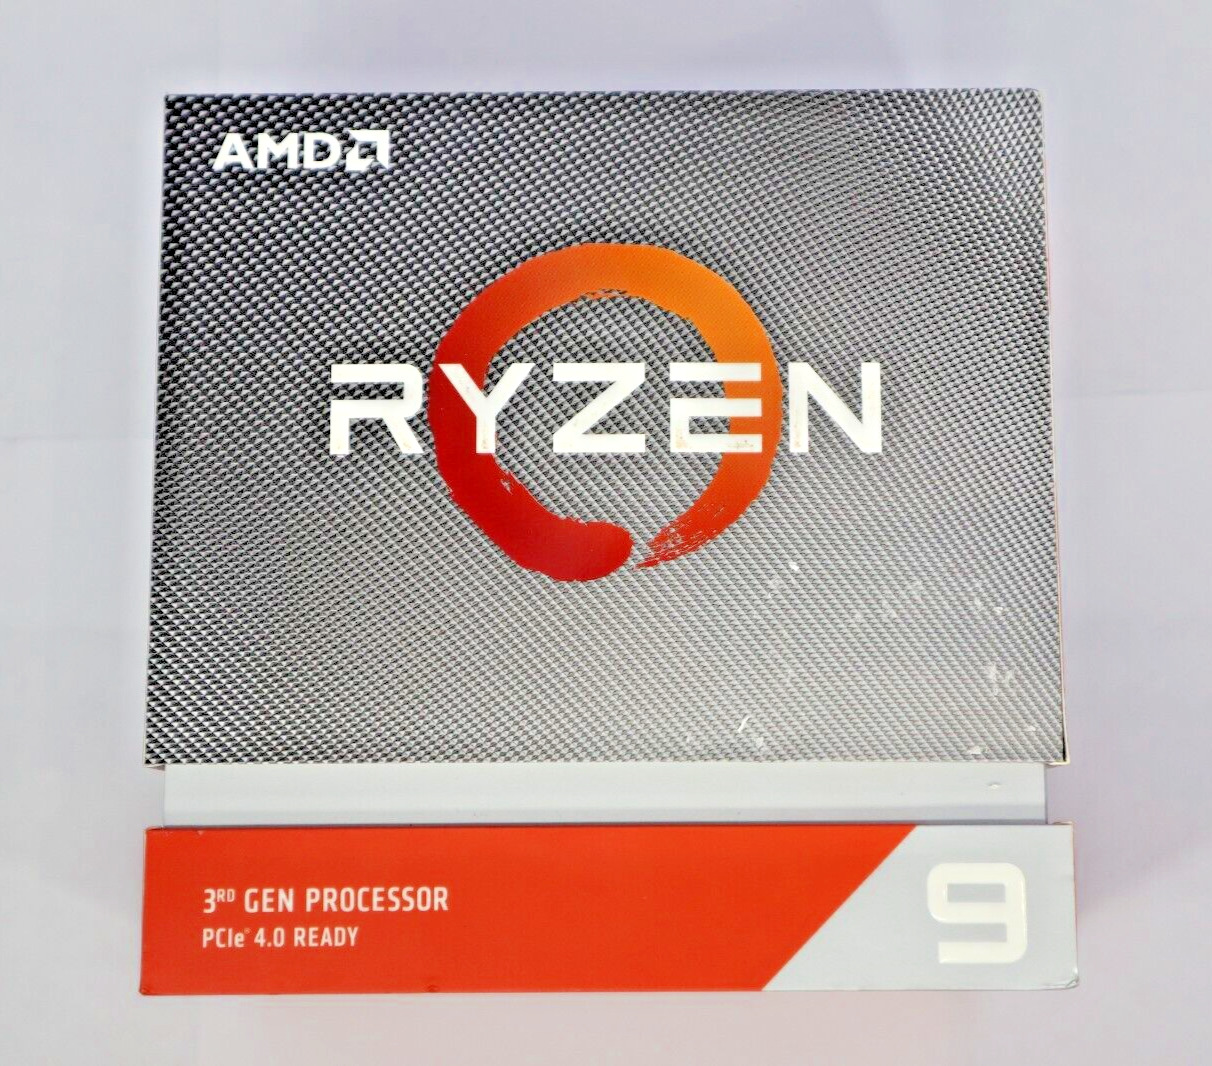 RYZEN 3rd Gen Processor